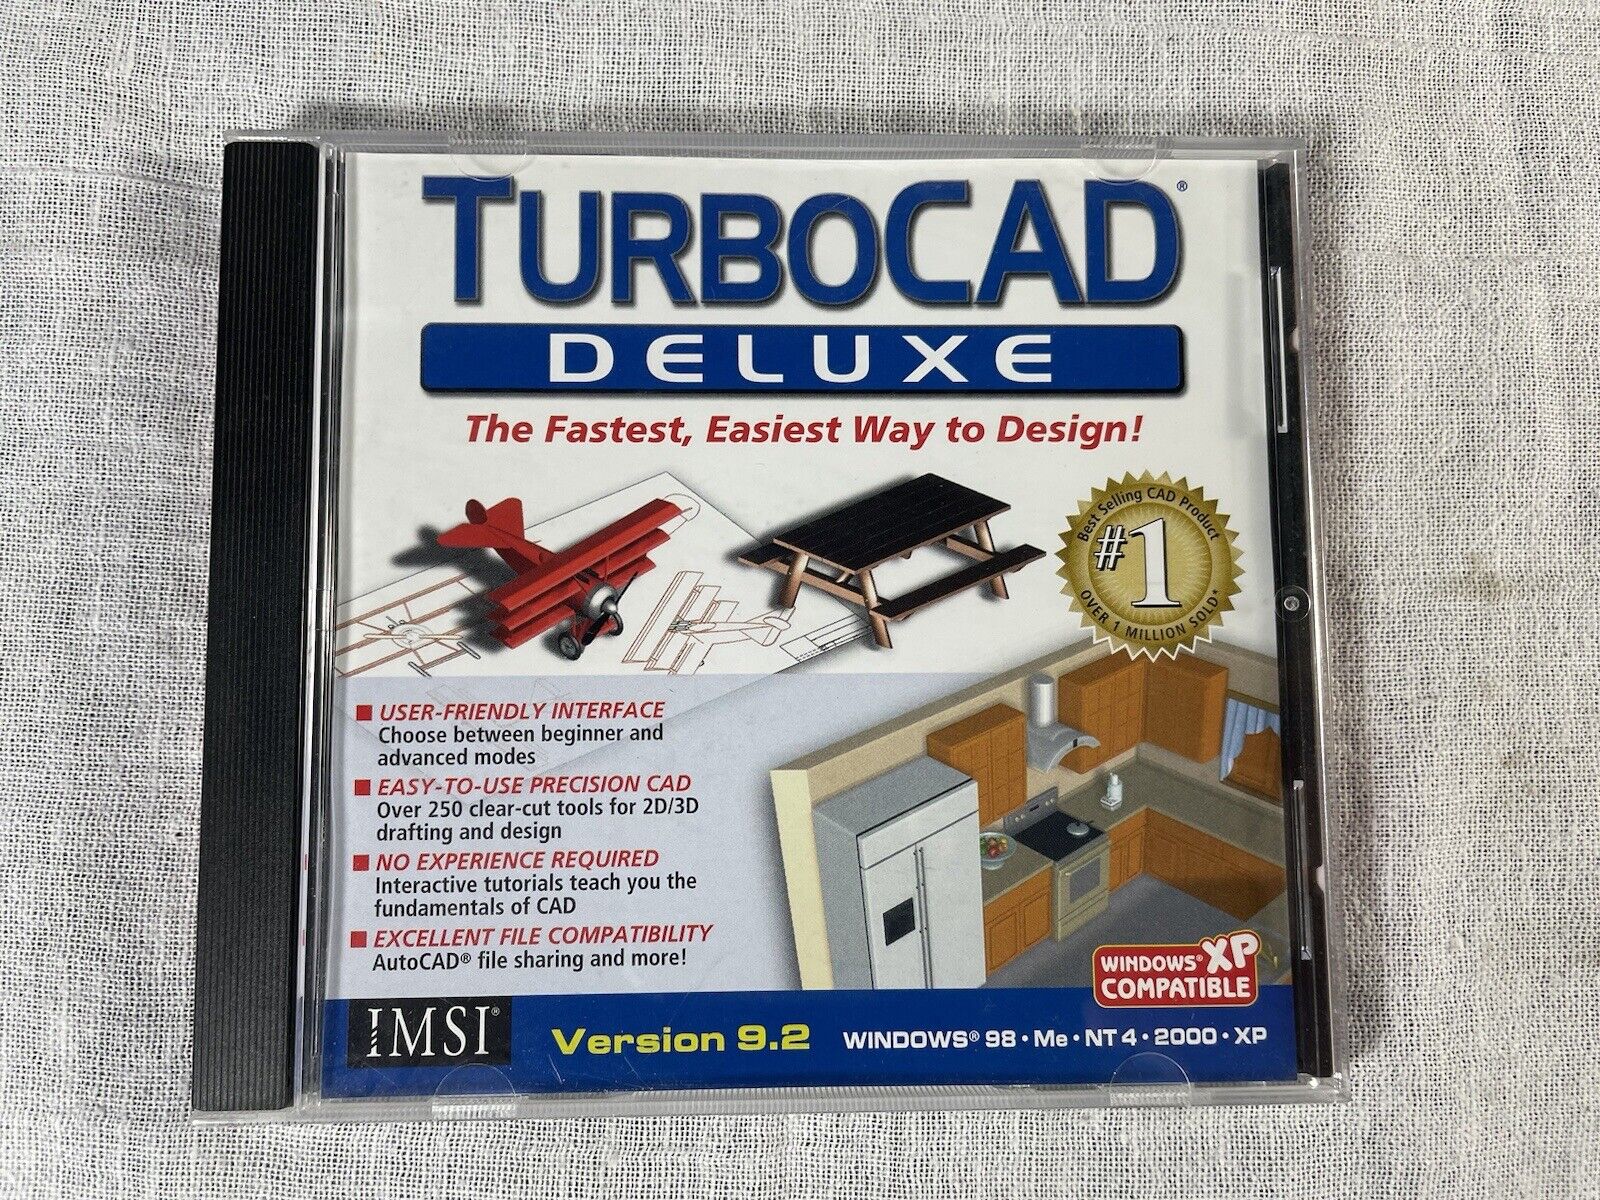 TurboCAD Deluxe 9.2 For WINDOWS 98, 2000, XP Design Software 3D 2005 IMSI